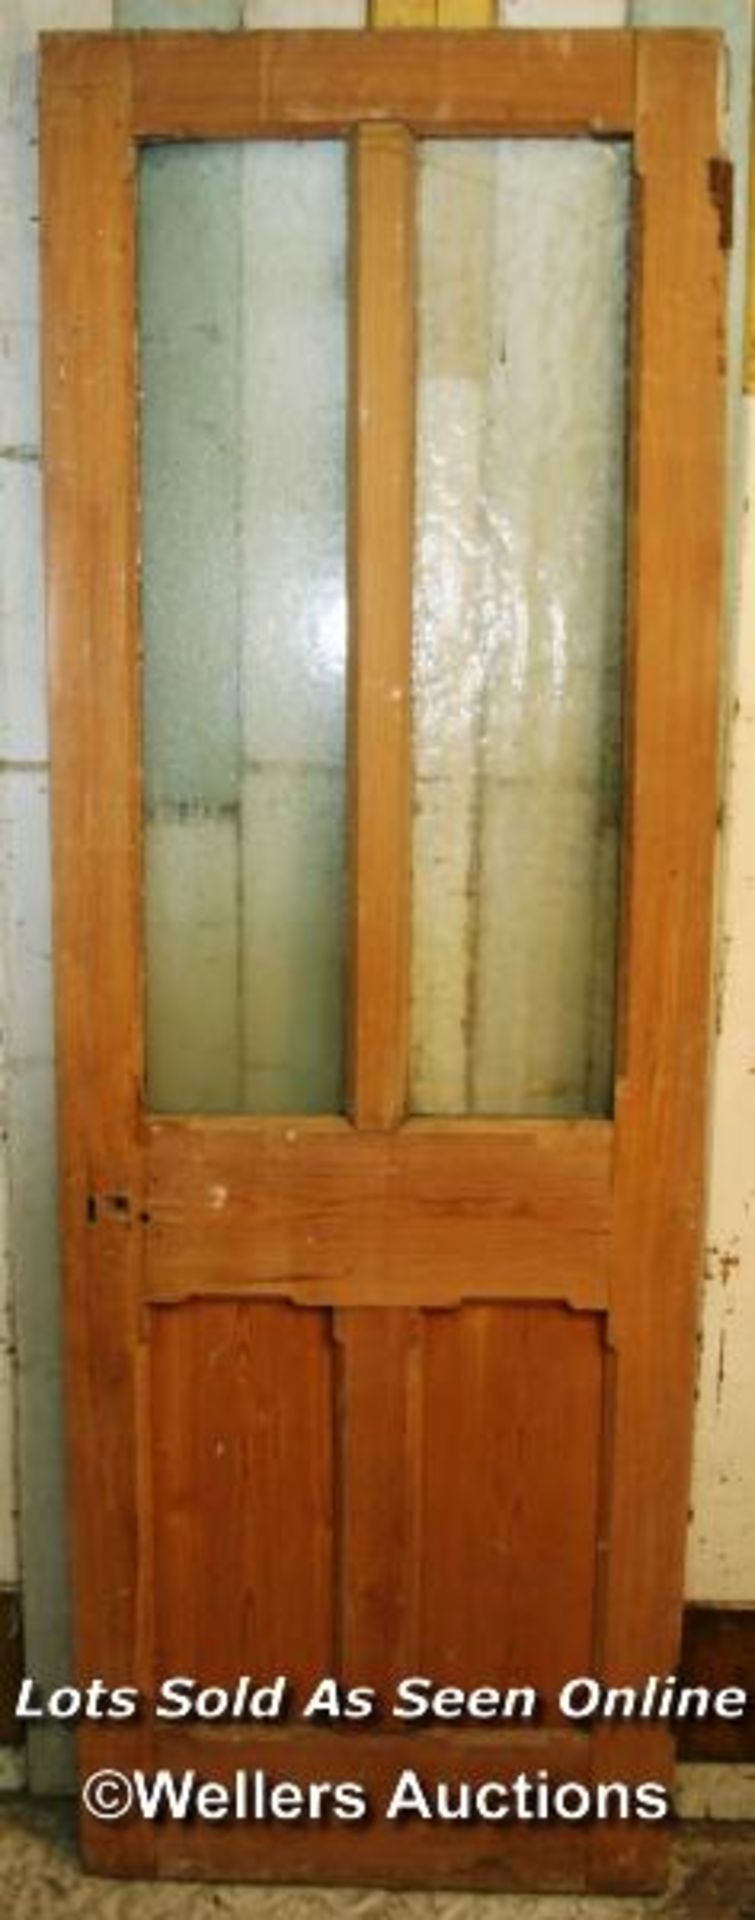 2 Victorian four panel glazed doors for restoration. Sizes 73cm x 216cm x 4.5cm and 84cm x 217cm x